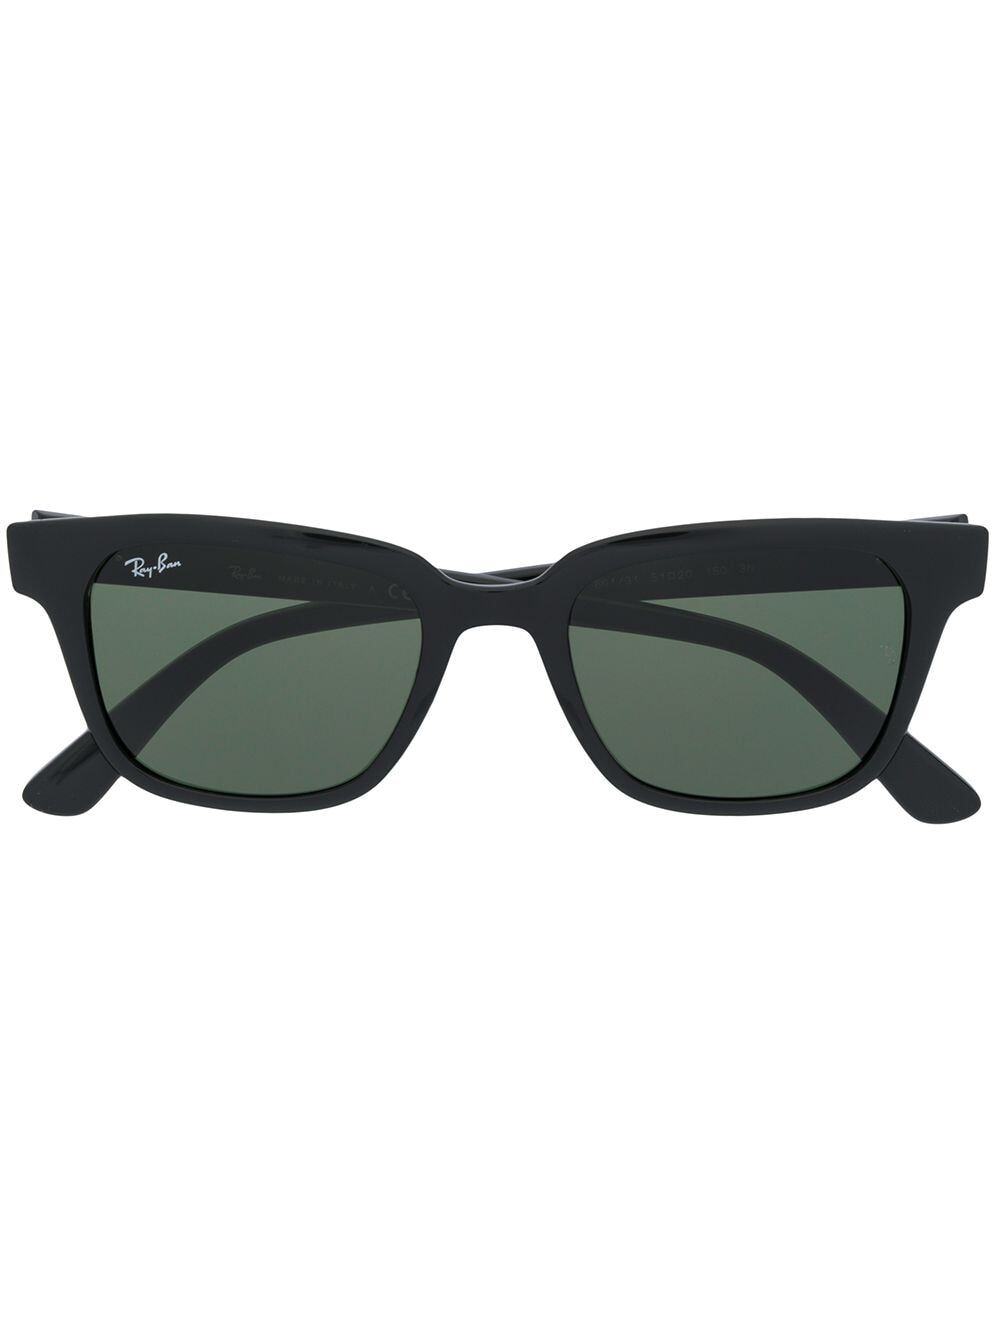 Ray-Ban rectangular frame sunglasses - Black